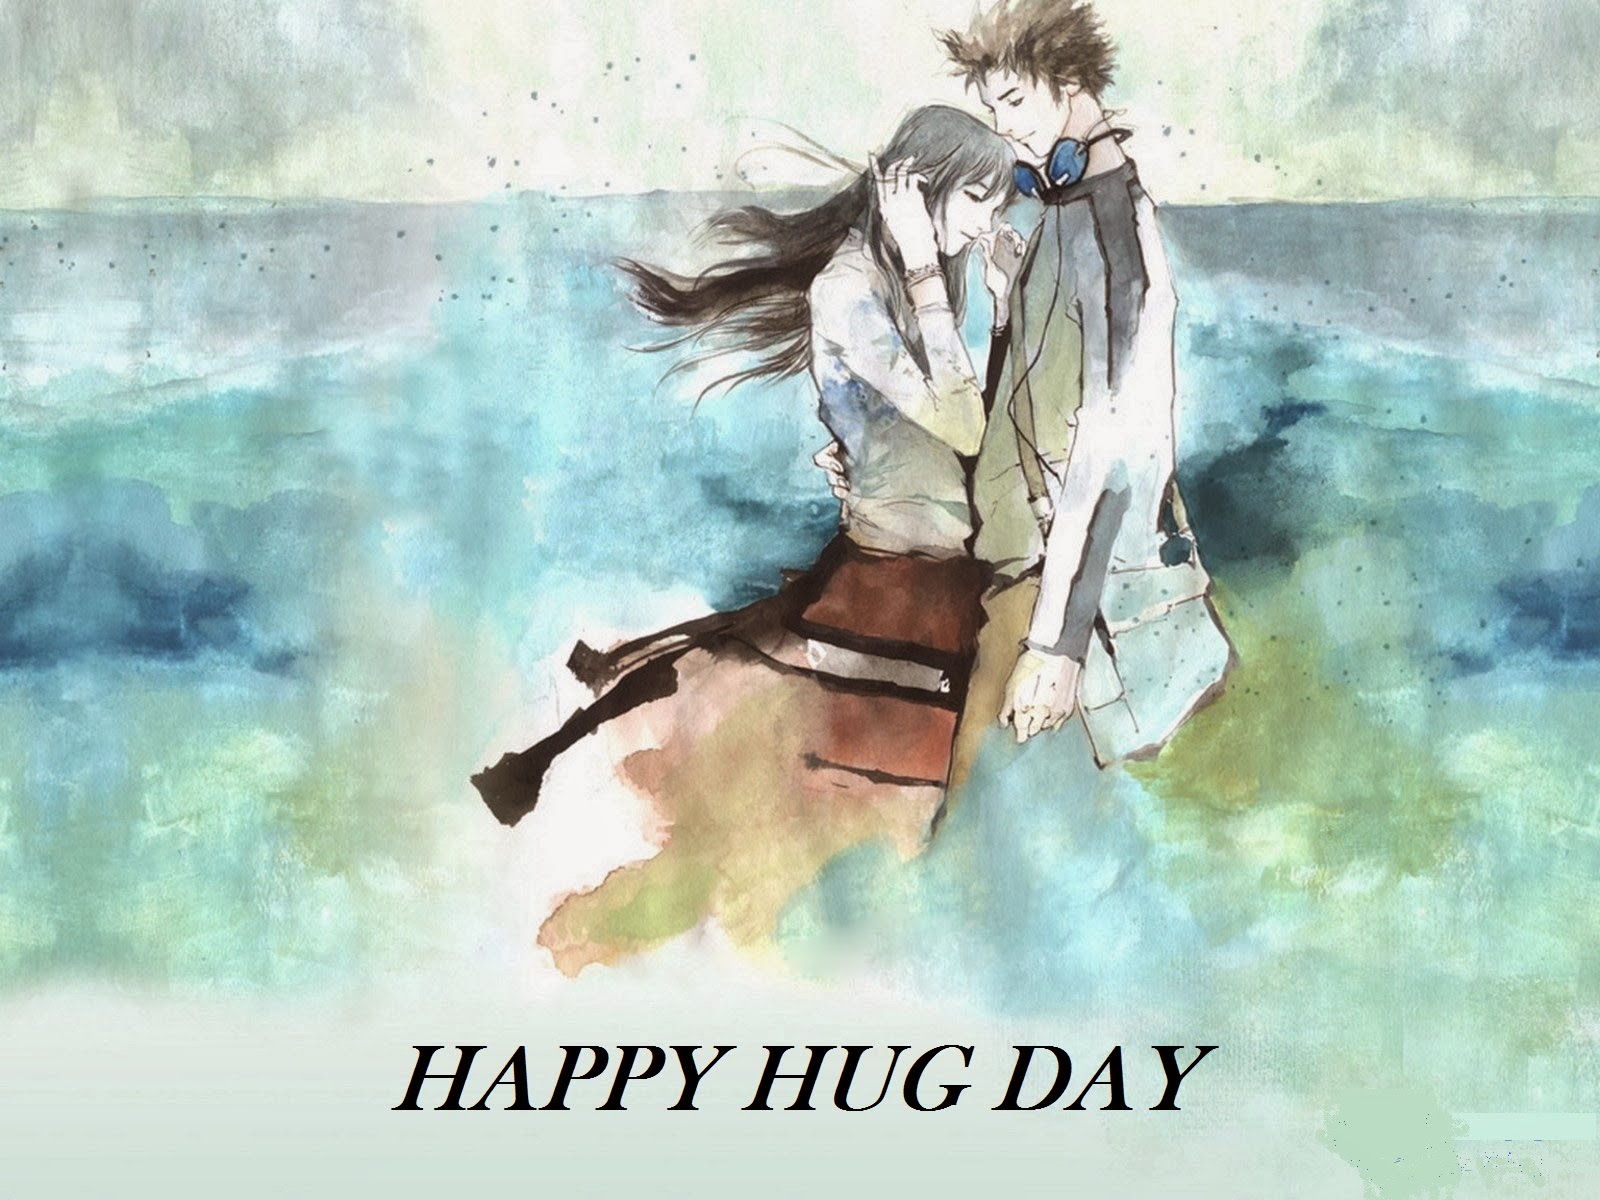 hug's day images hd